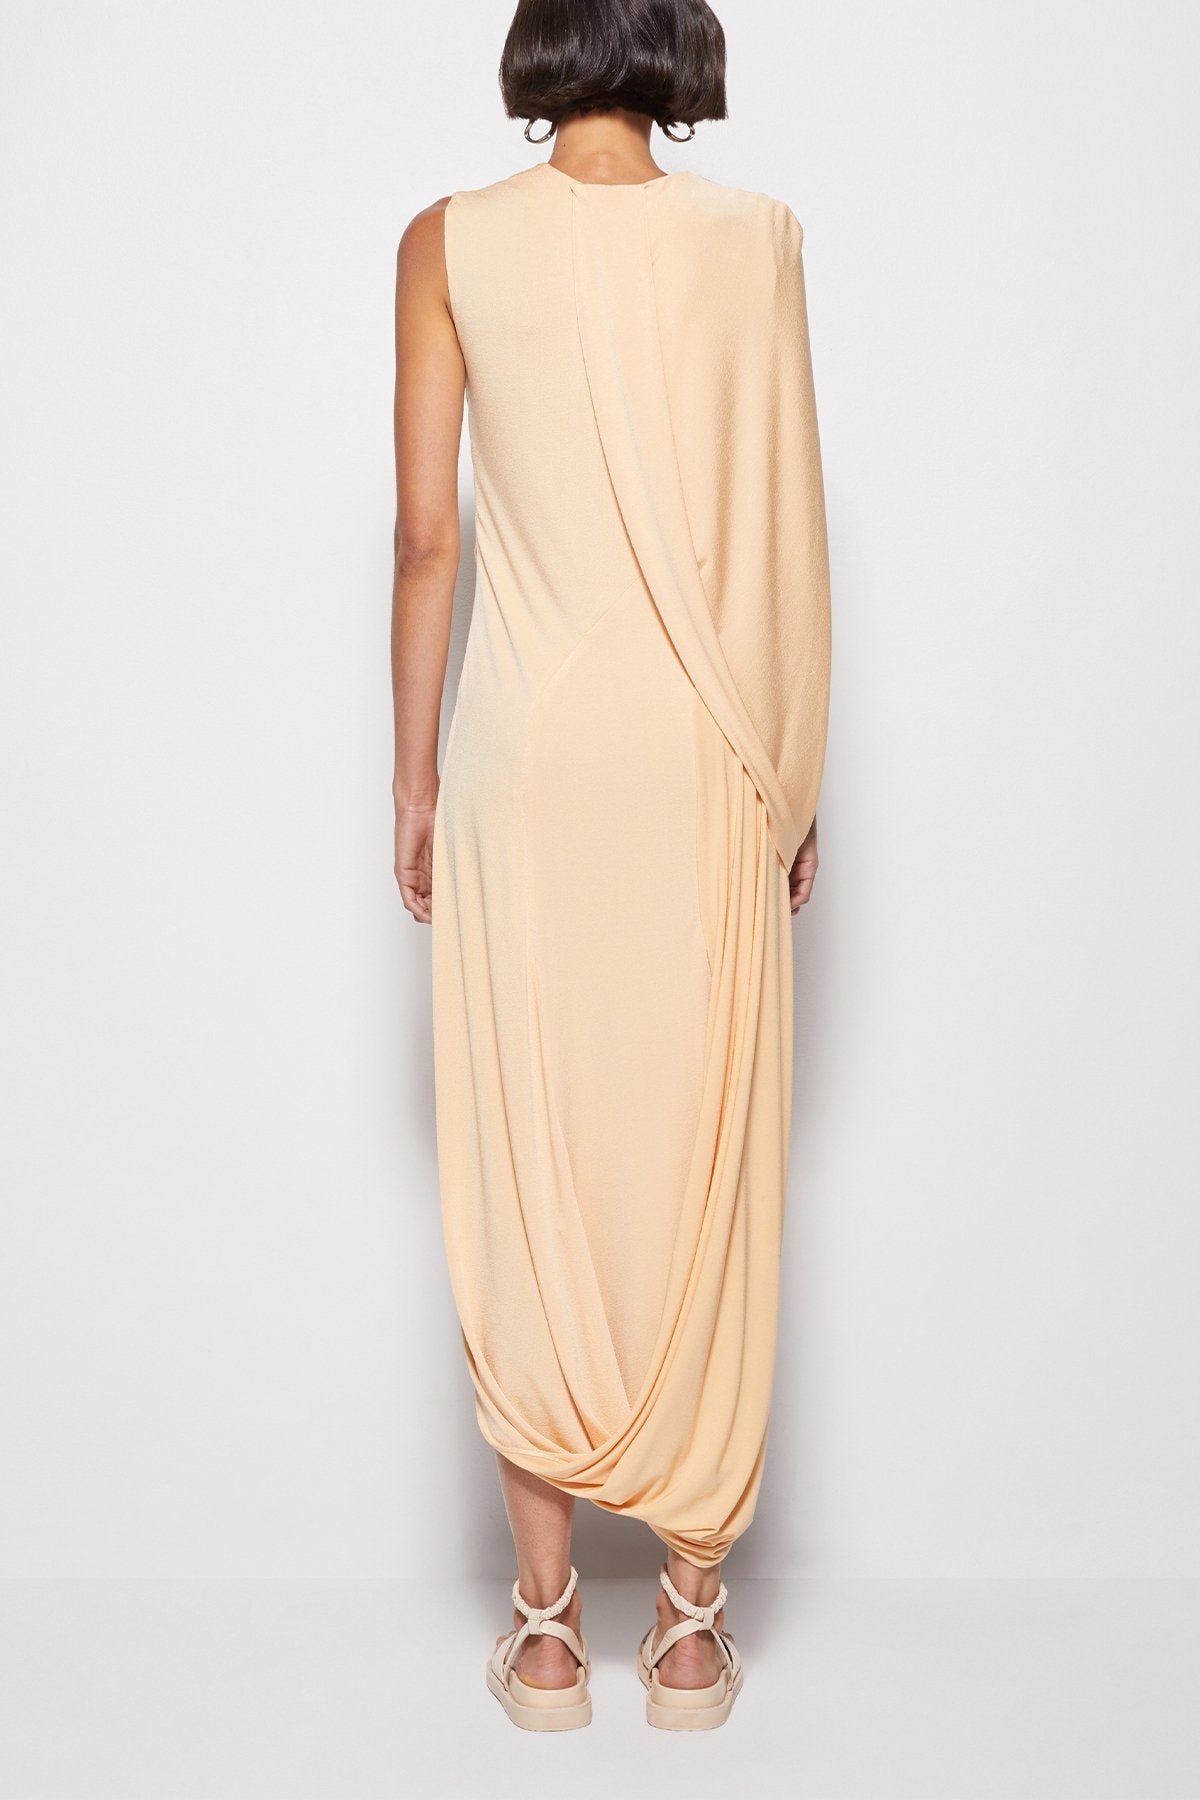 Roxi Draped Jersey Dress in Rattan - shop-olivia.com